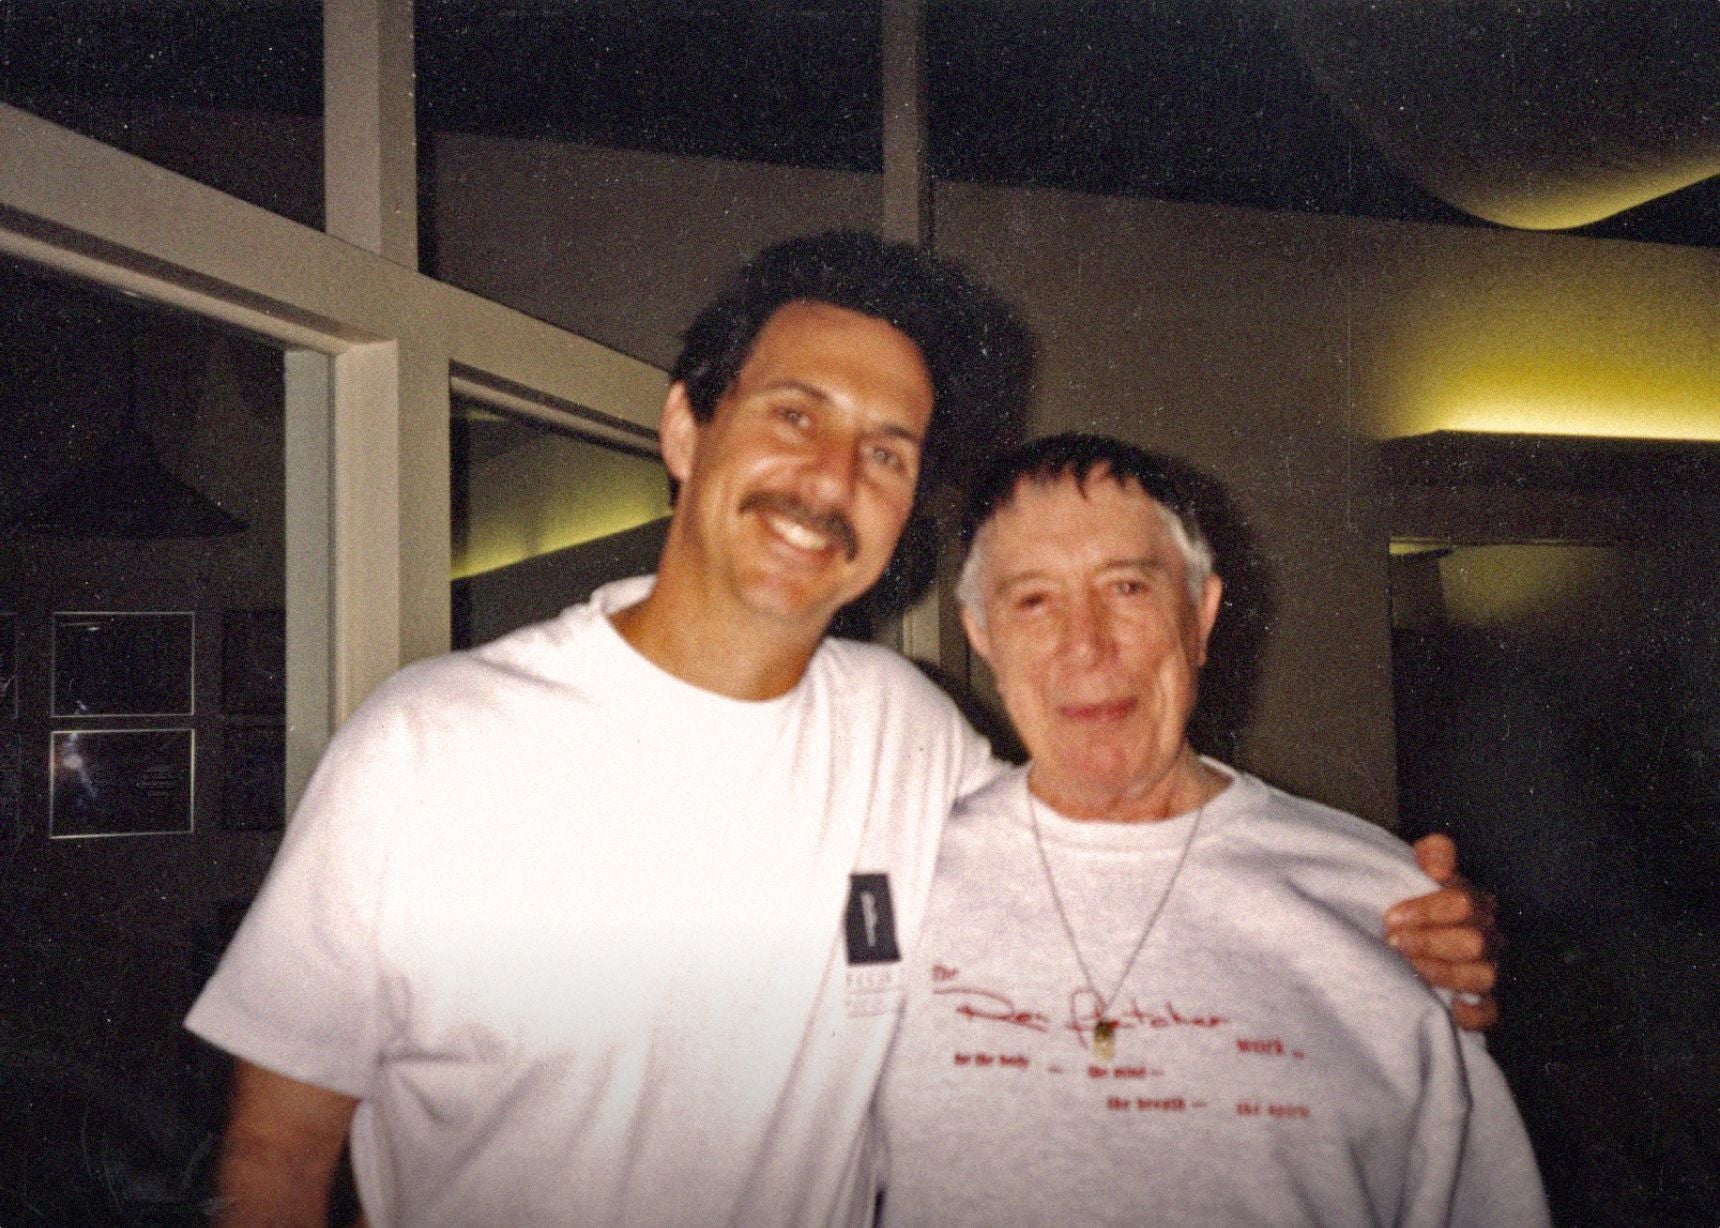 The founder of Balanced Body, Ken Endelman and Ron Fletcher 